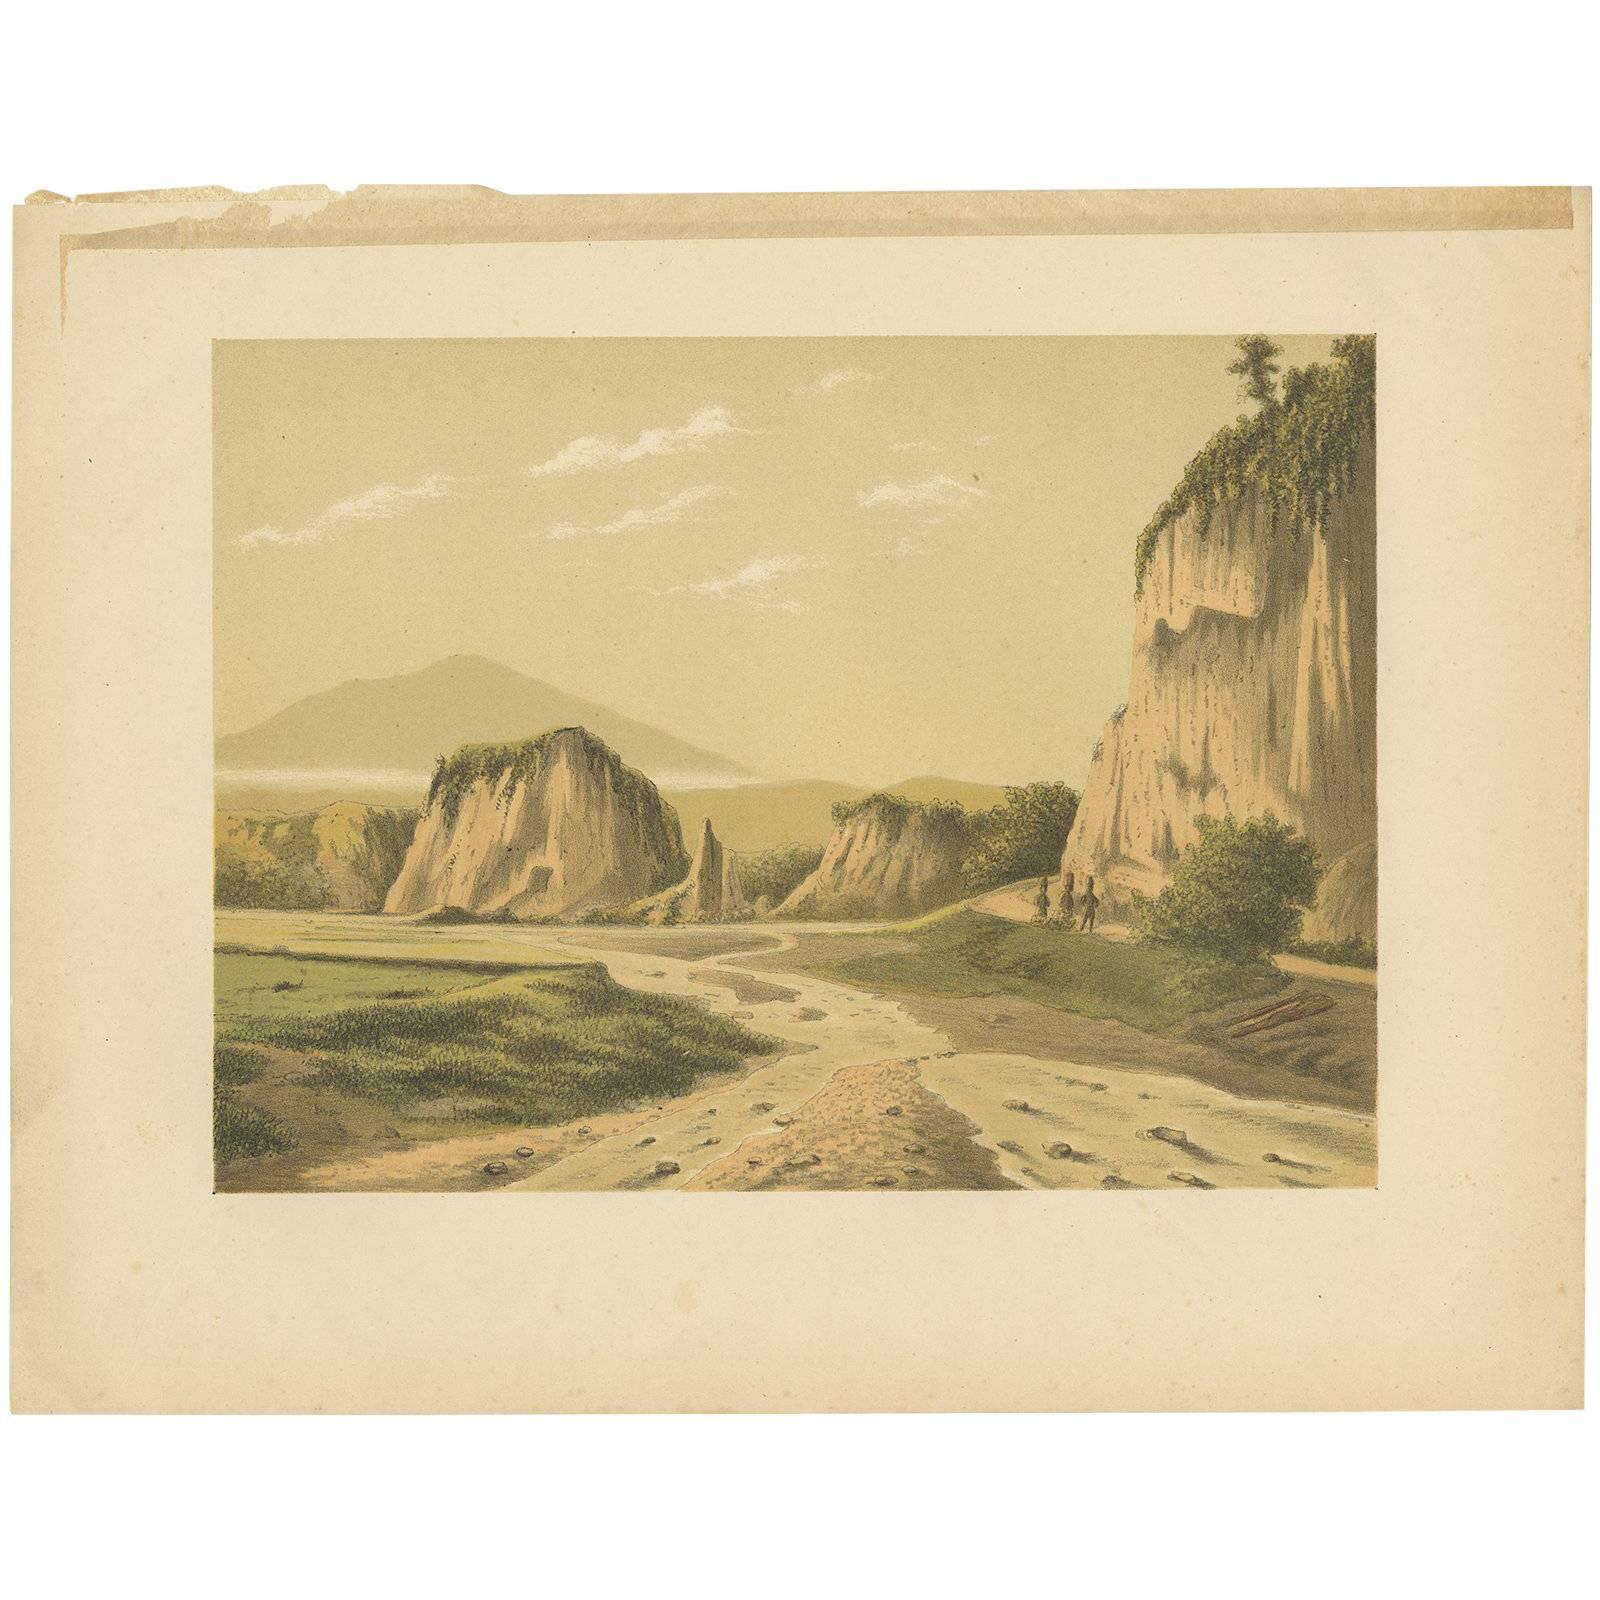 Antique Print of Ngarai Sianok 'Sumatra' by M.T.H. Perelaer, 1888